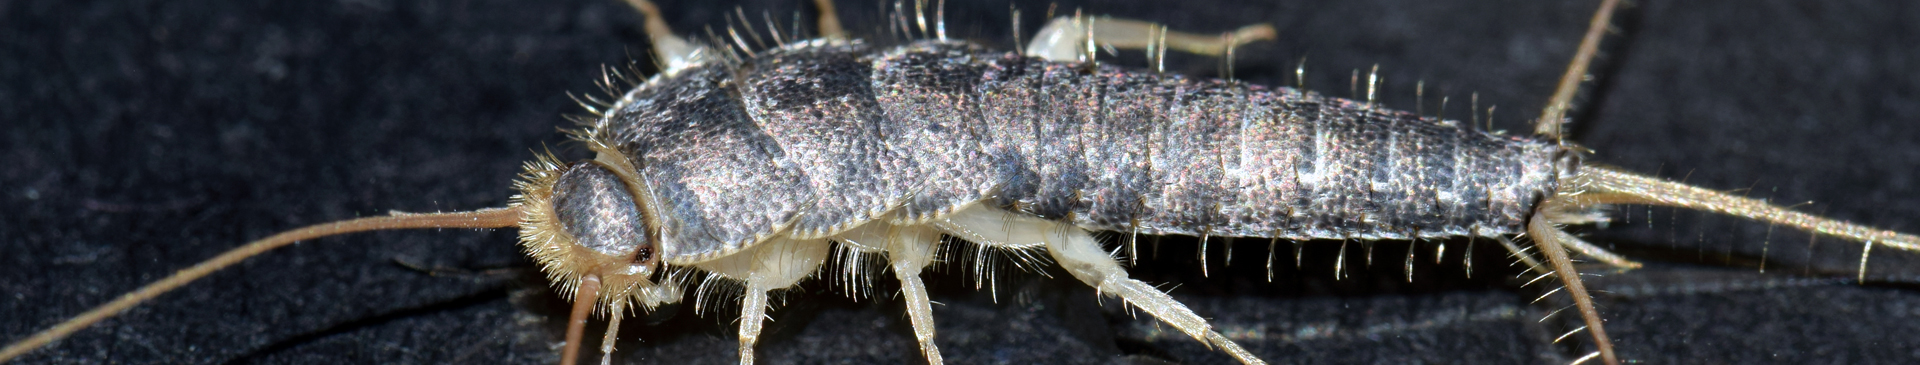 close up of silverfish